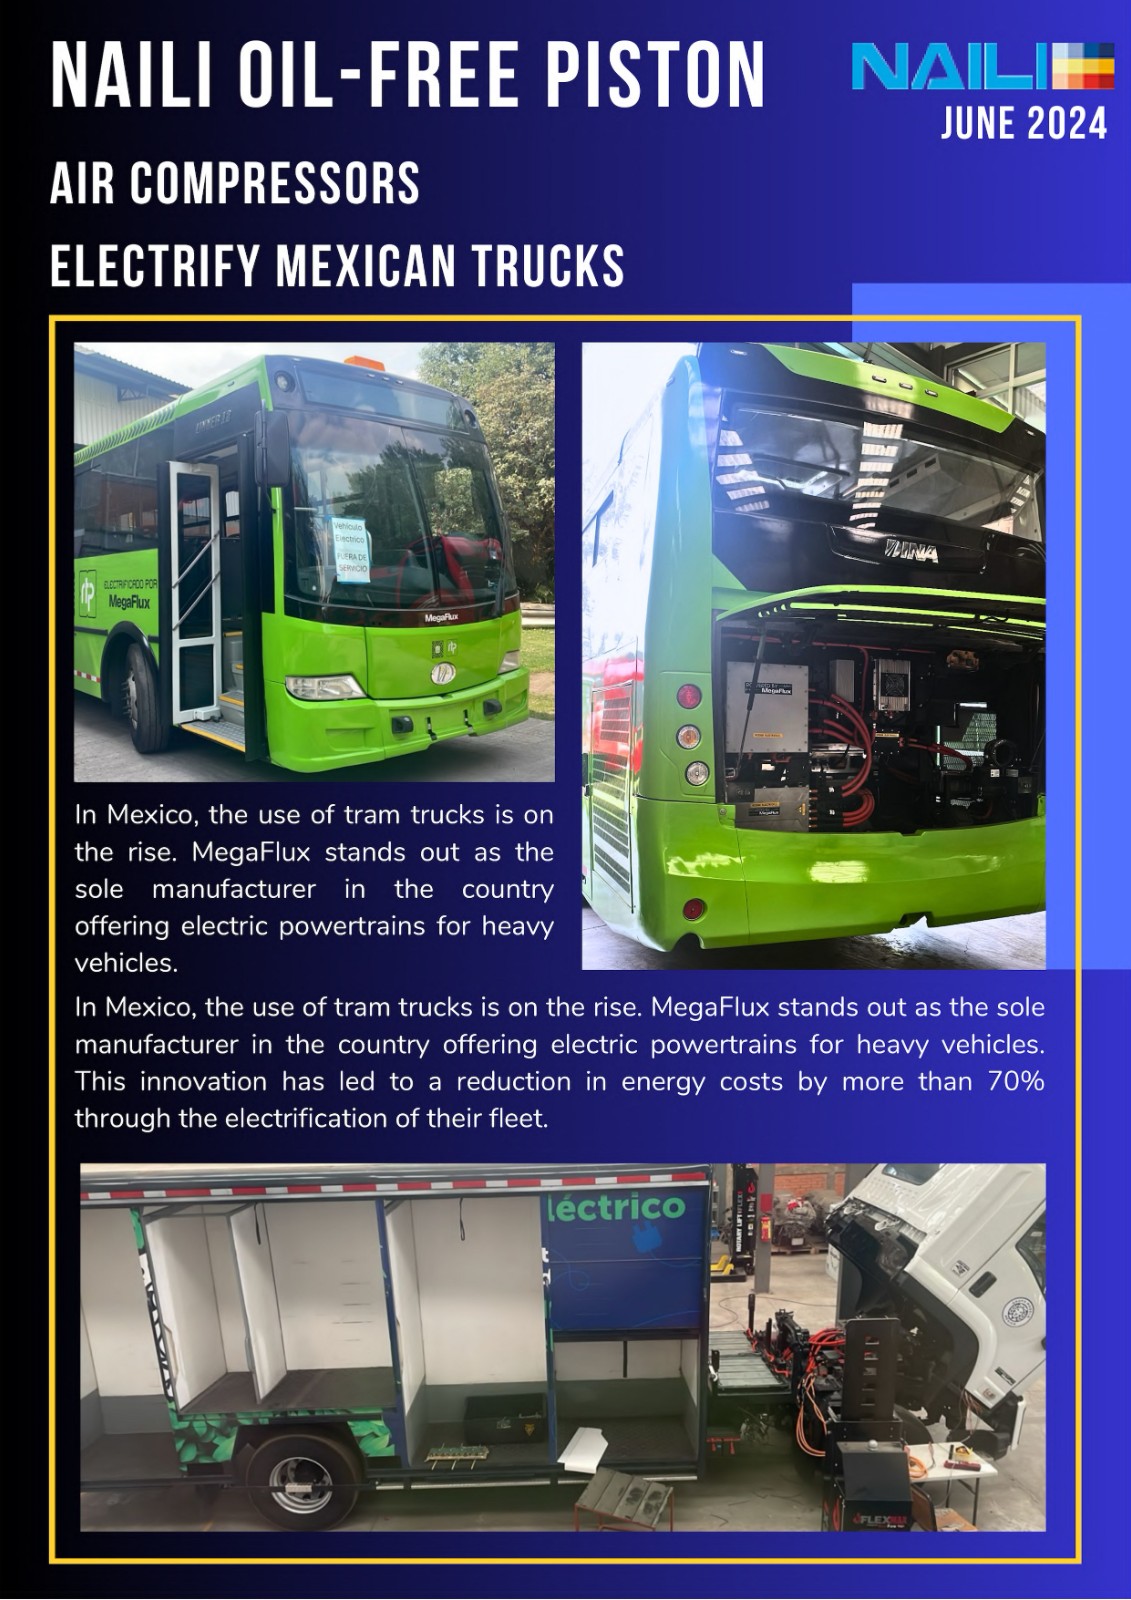 NAILI oil-free piston compressor used in electric vehicles in Mexico